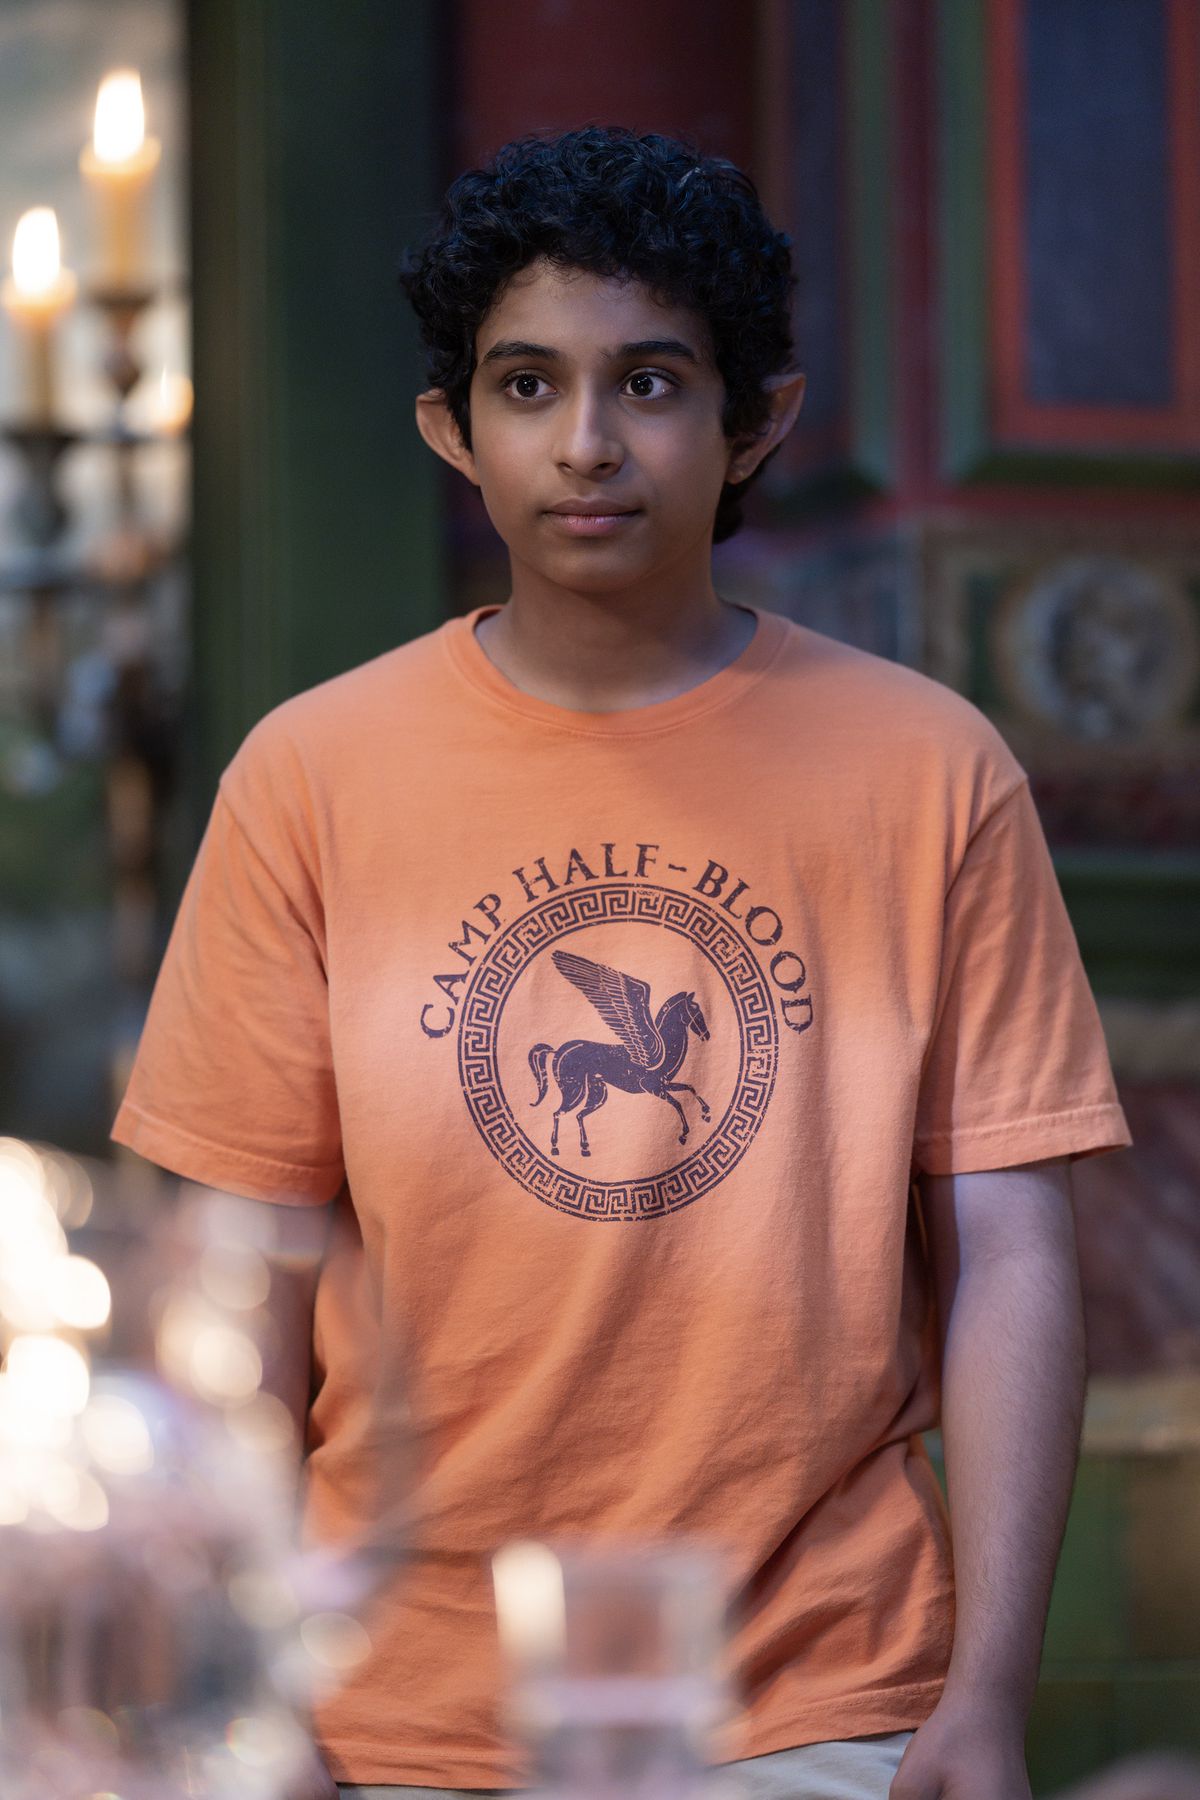 Grover (ARYAN SIMHADRI) in a Camp Half-Blood shirt